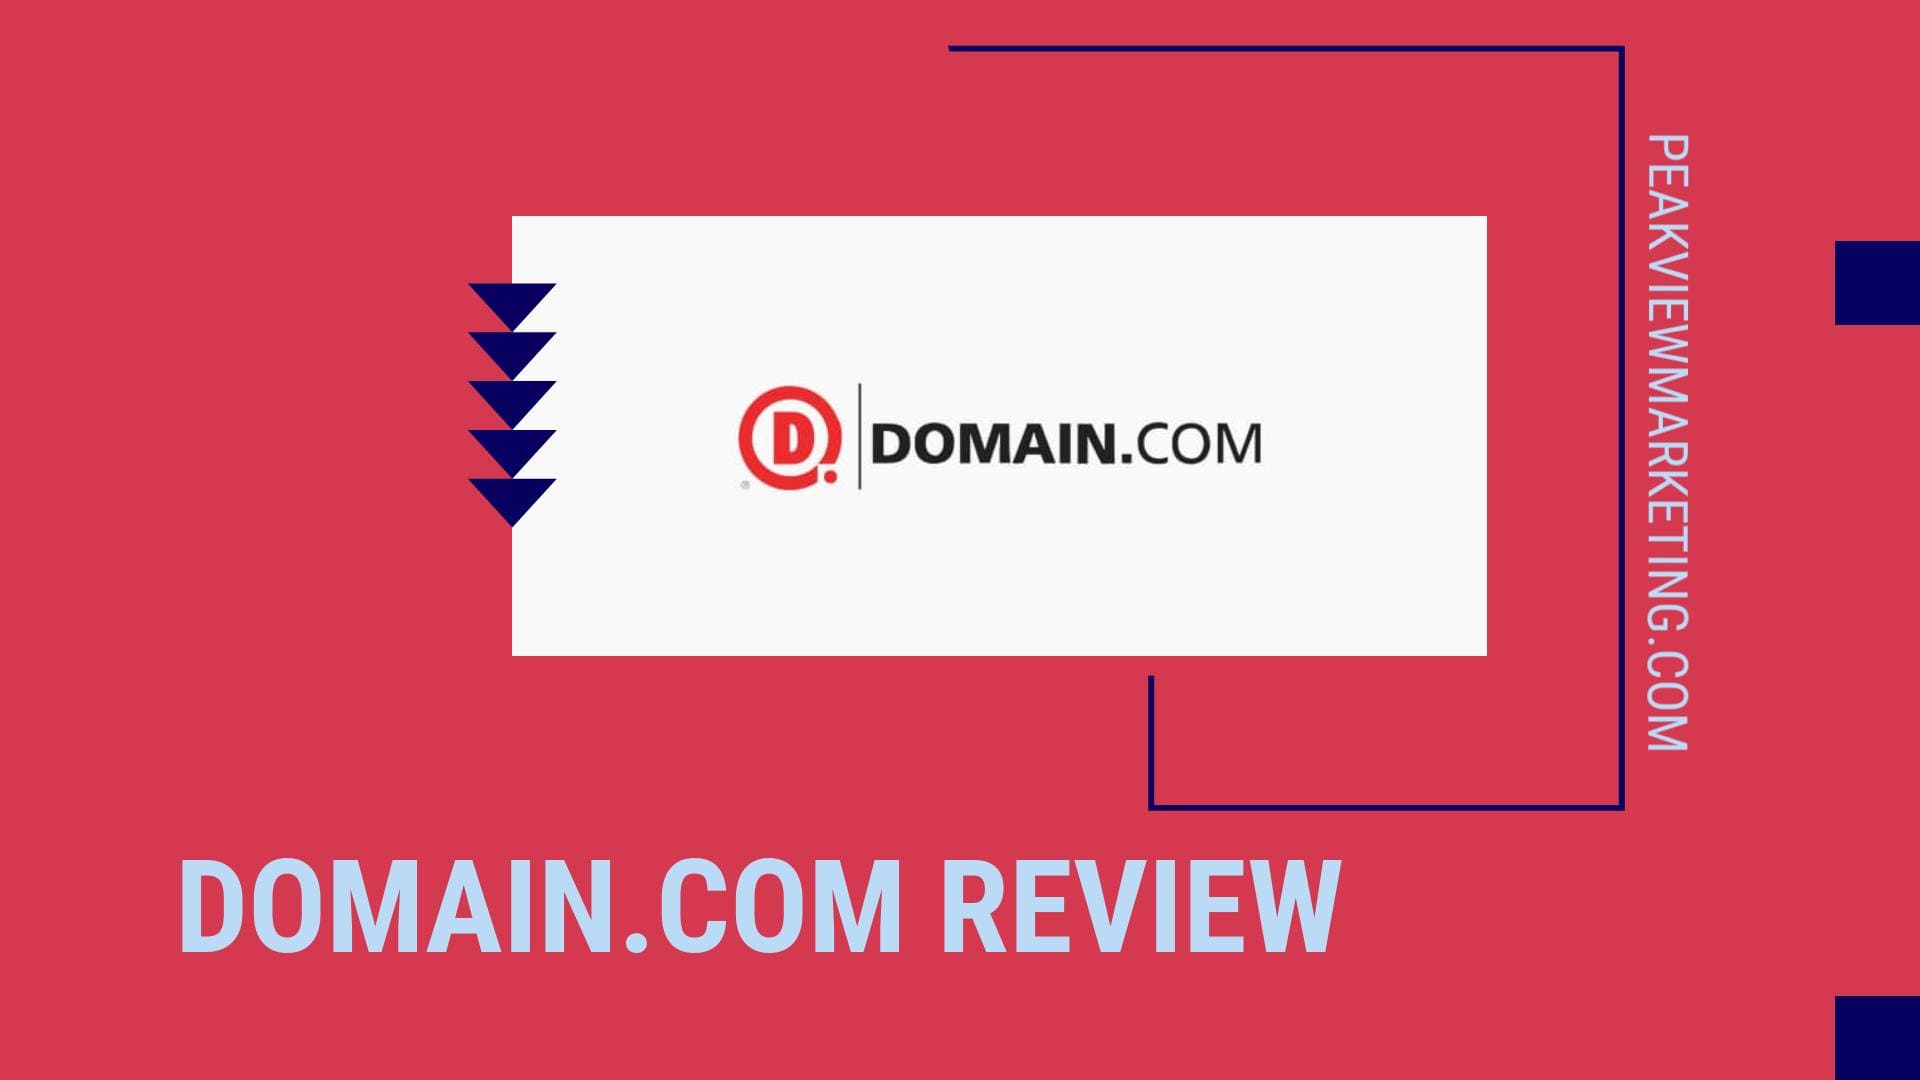 Domain.com Review Image